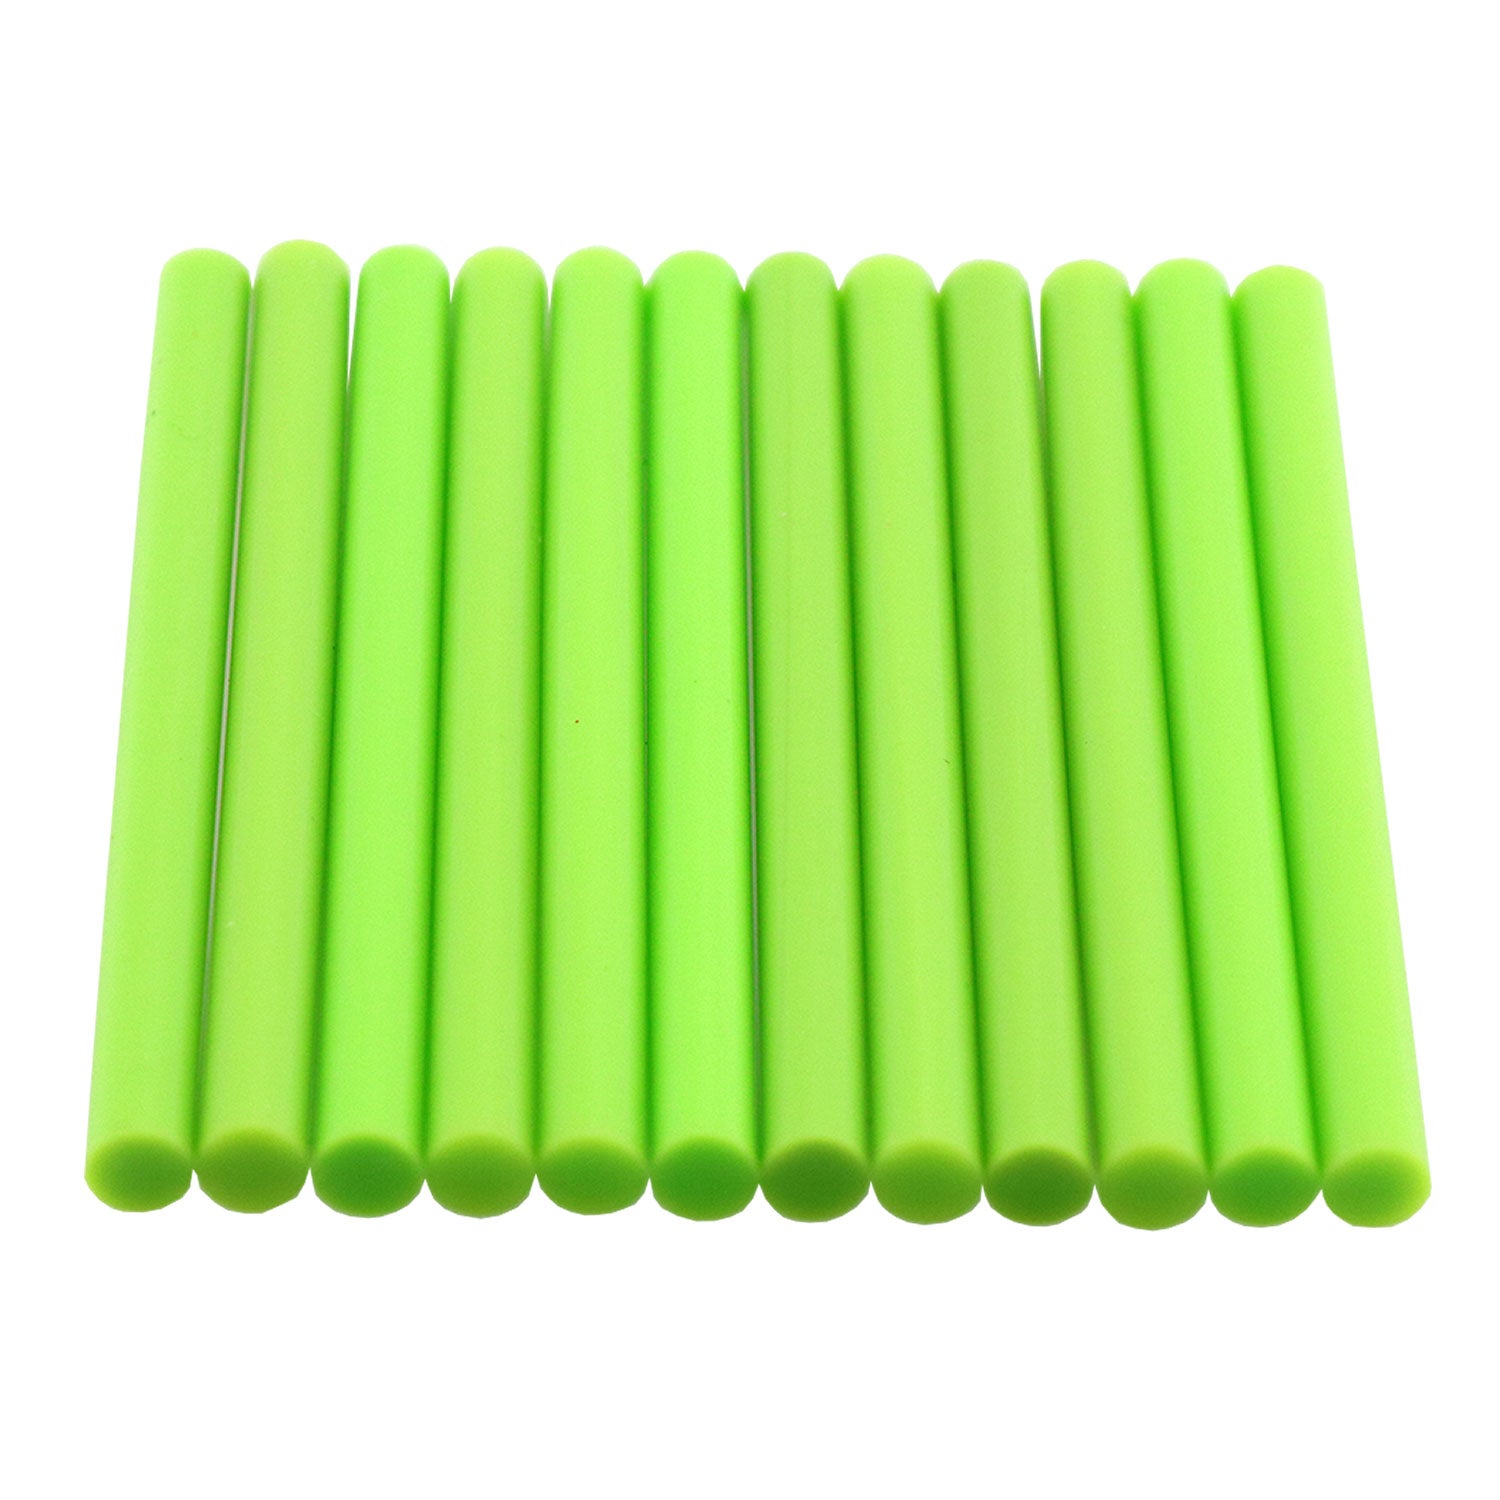 GlueSticksDirect Translucent Green Colored Glue Sticks Mini X 4 24 Sticks  - GlueSticksDirect